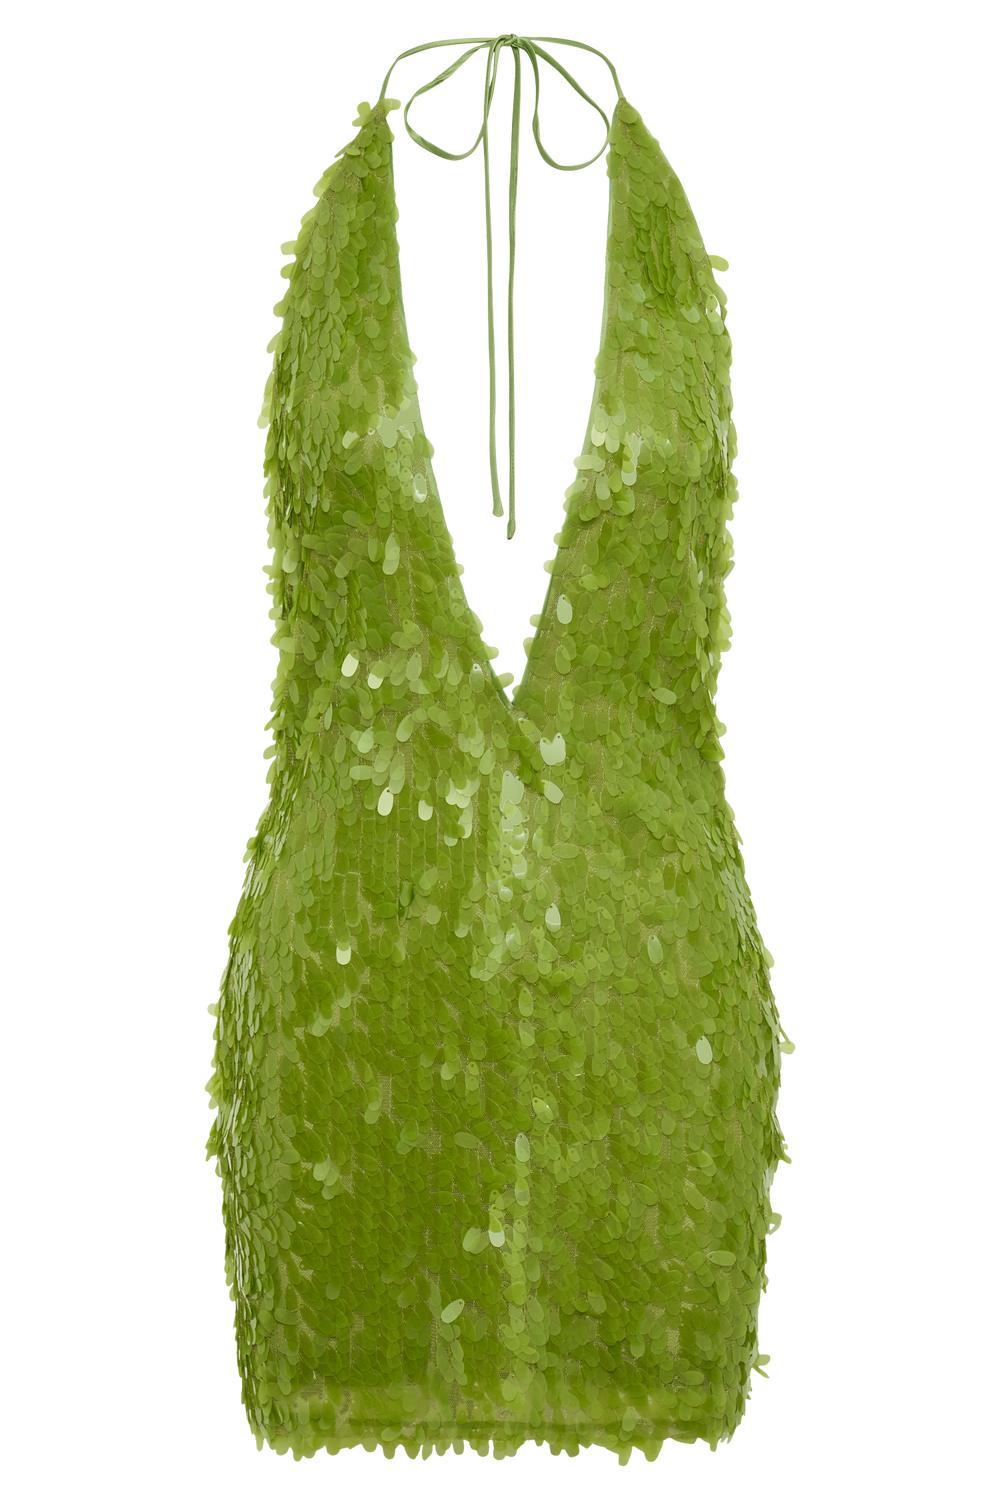 Primrose Sequin Halter Mini Dress - Parakeet Green